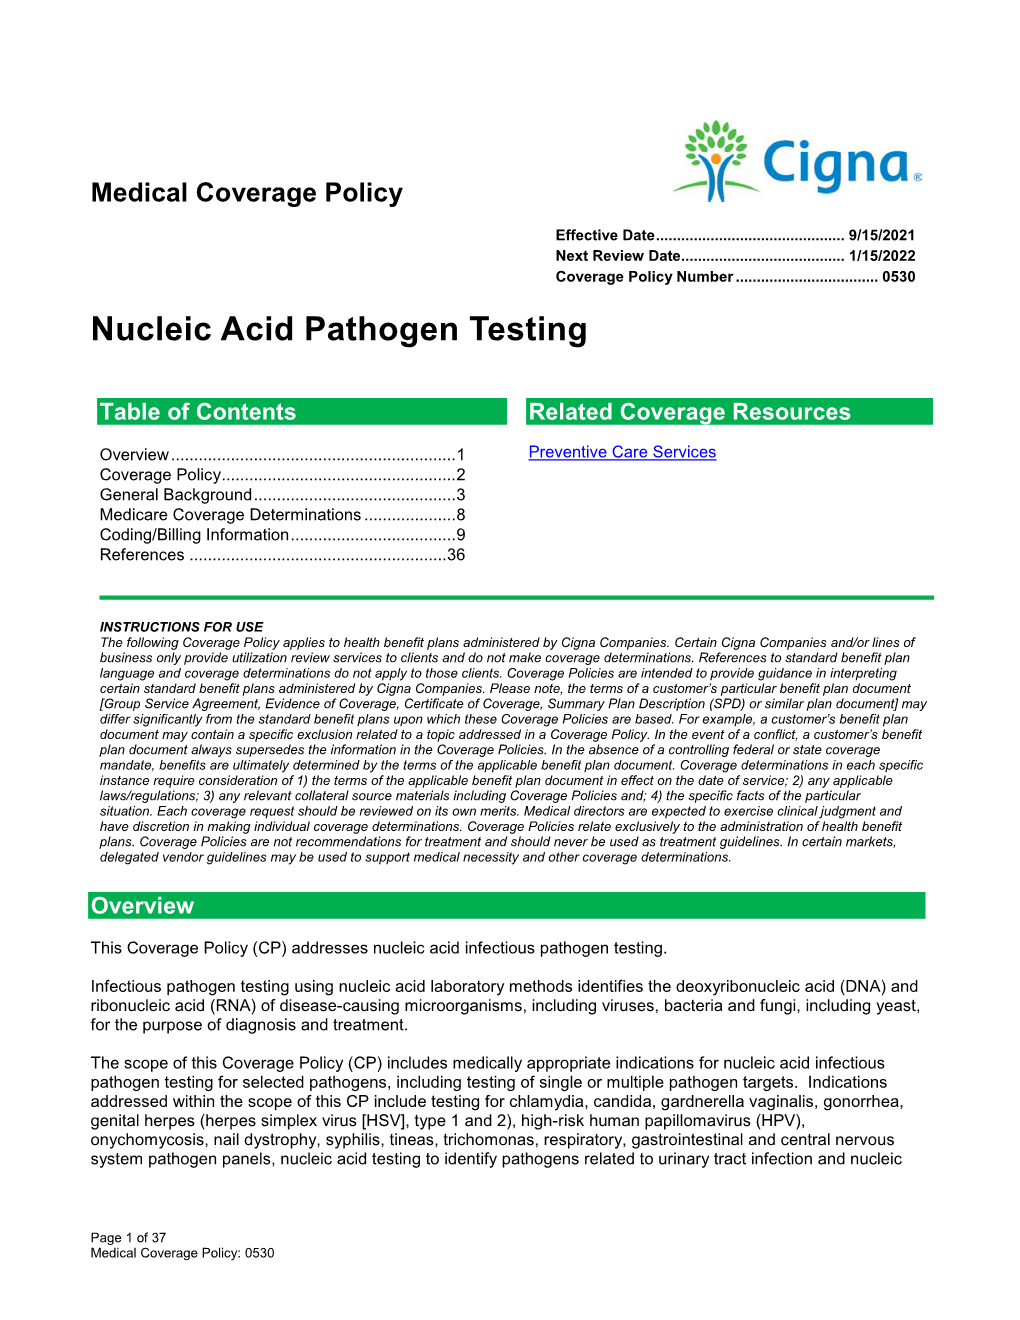 Nucleic Acid Pathogen Testing – (0530)